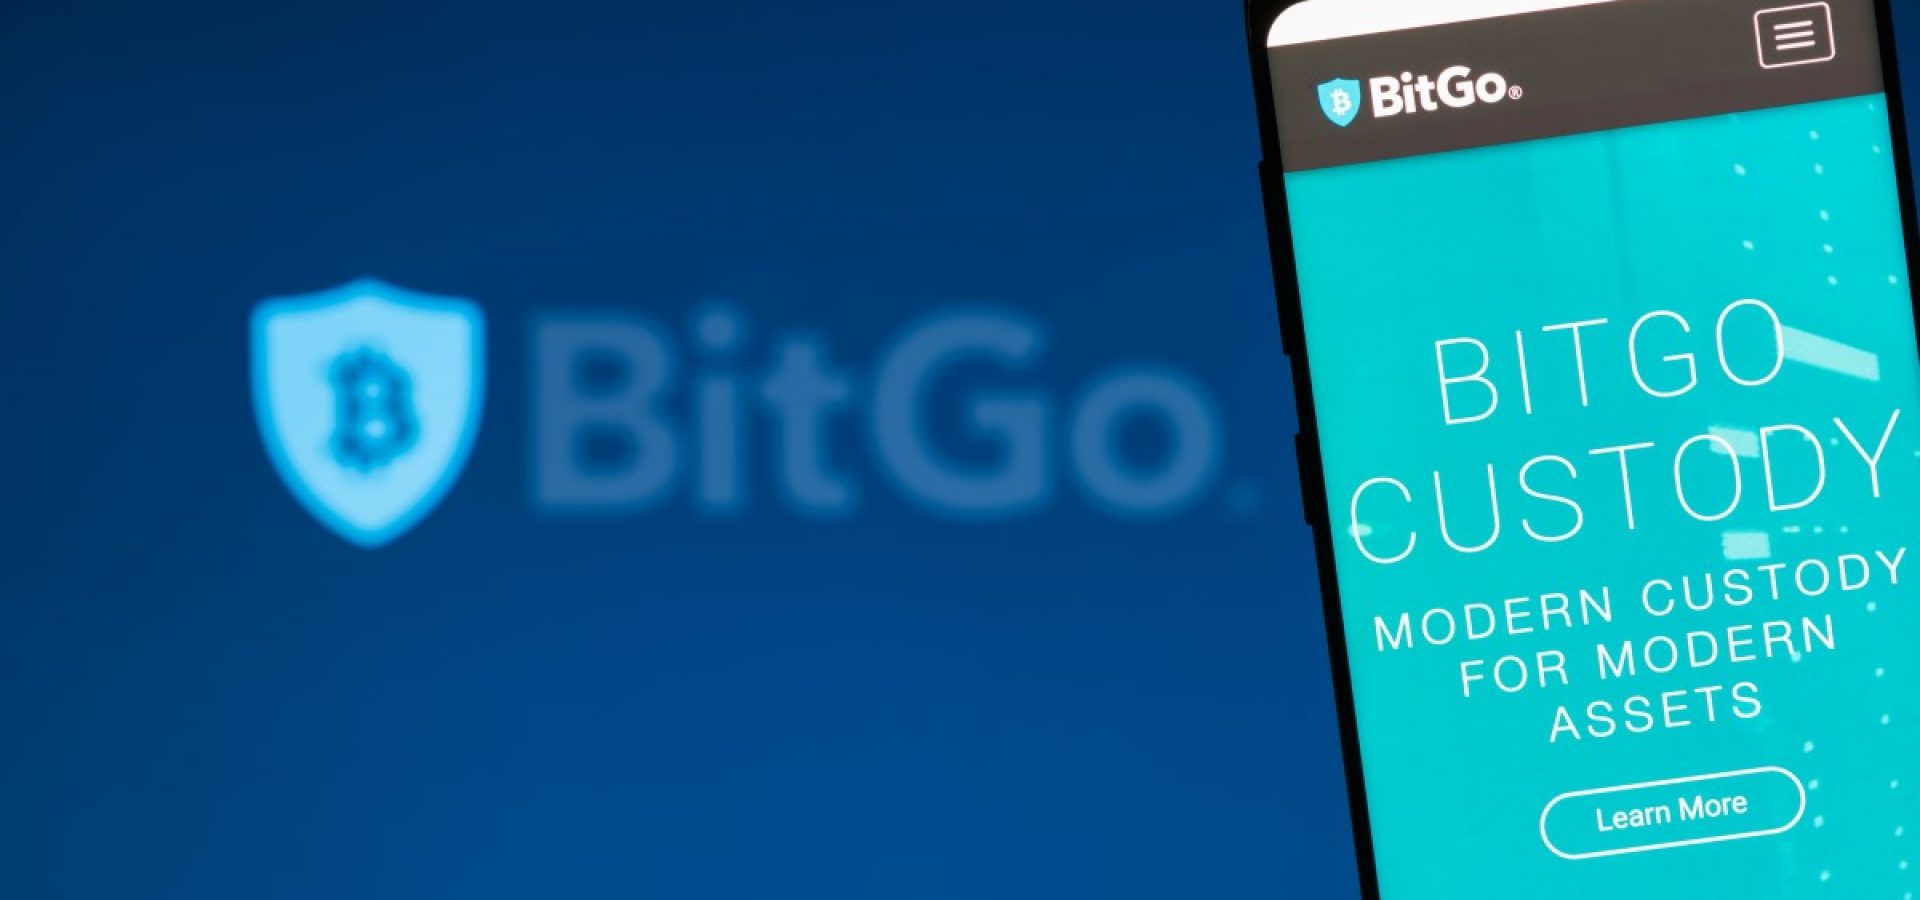 BitGo and Indian exchange CoinDCX